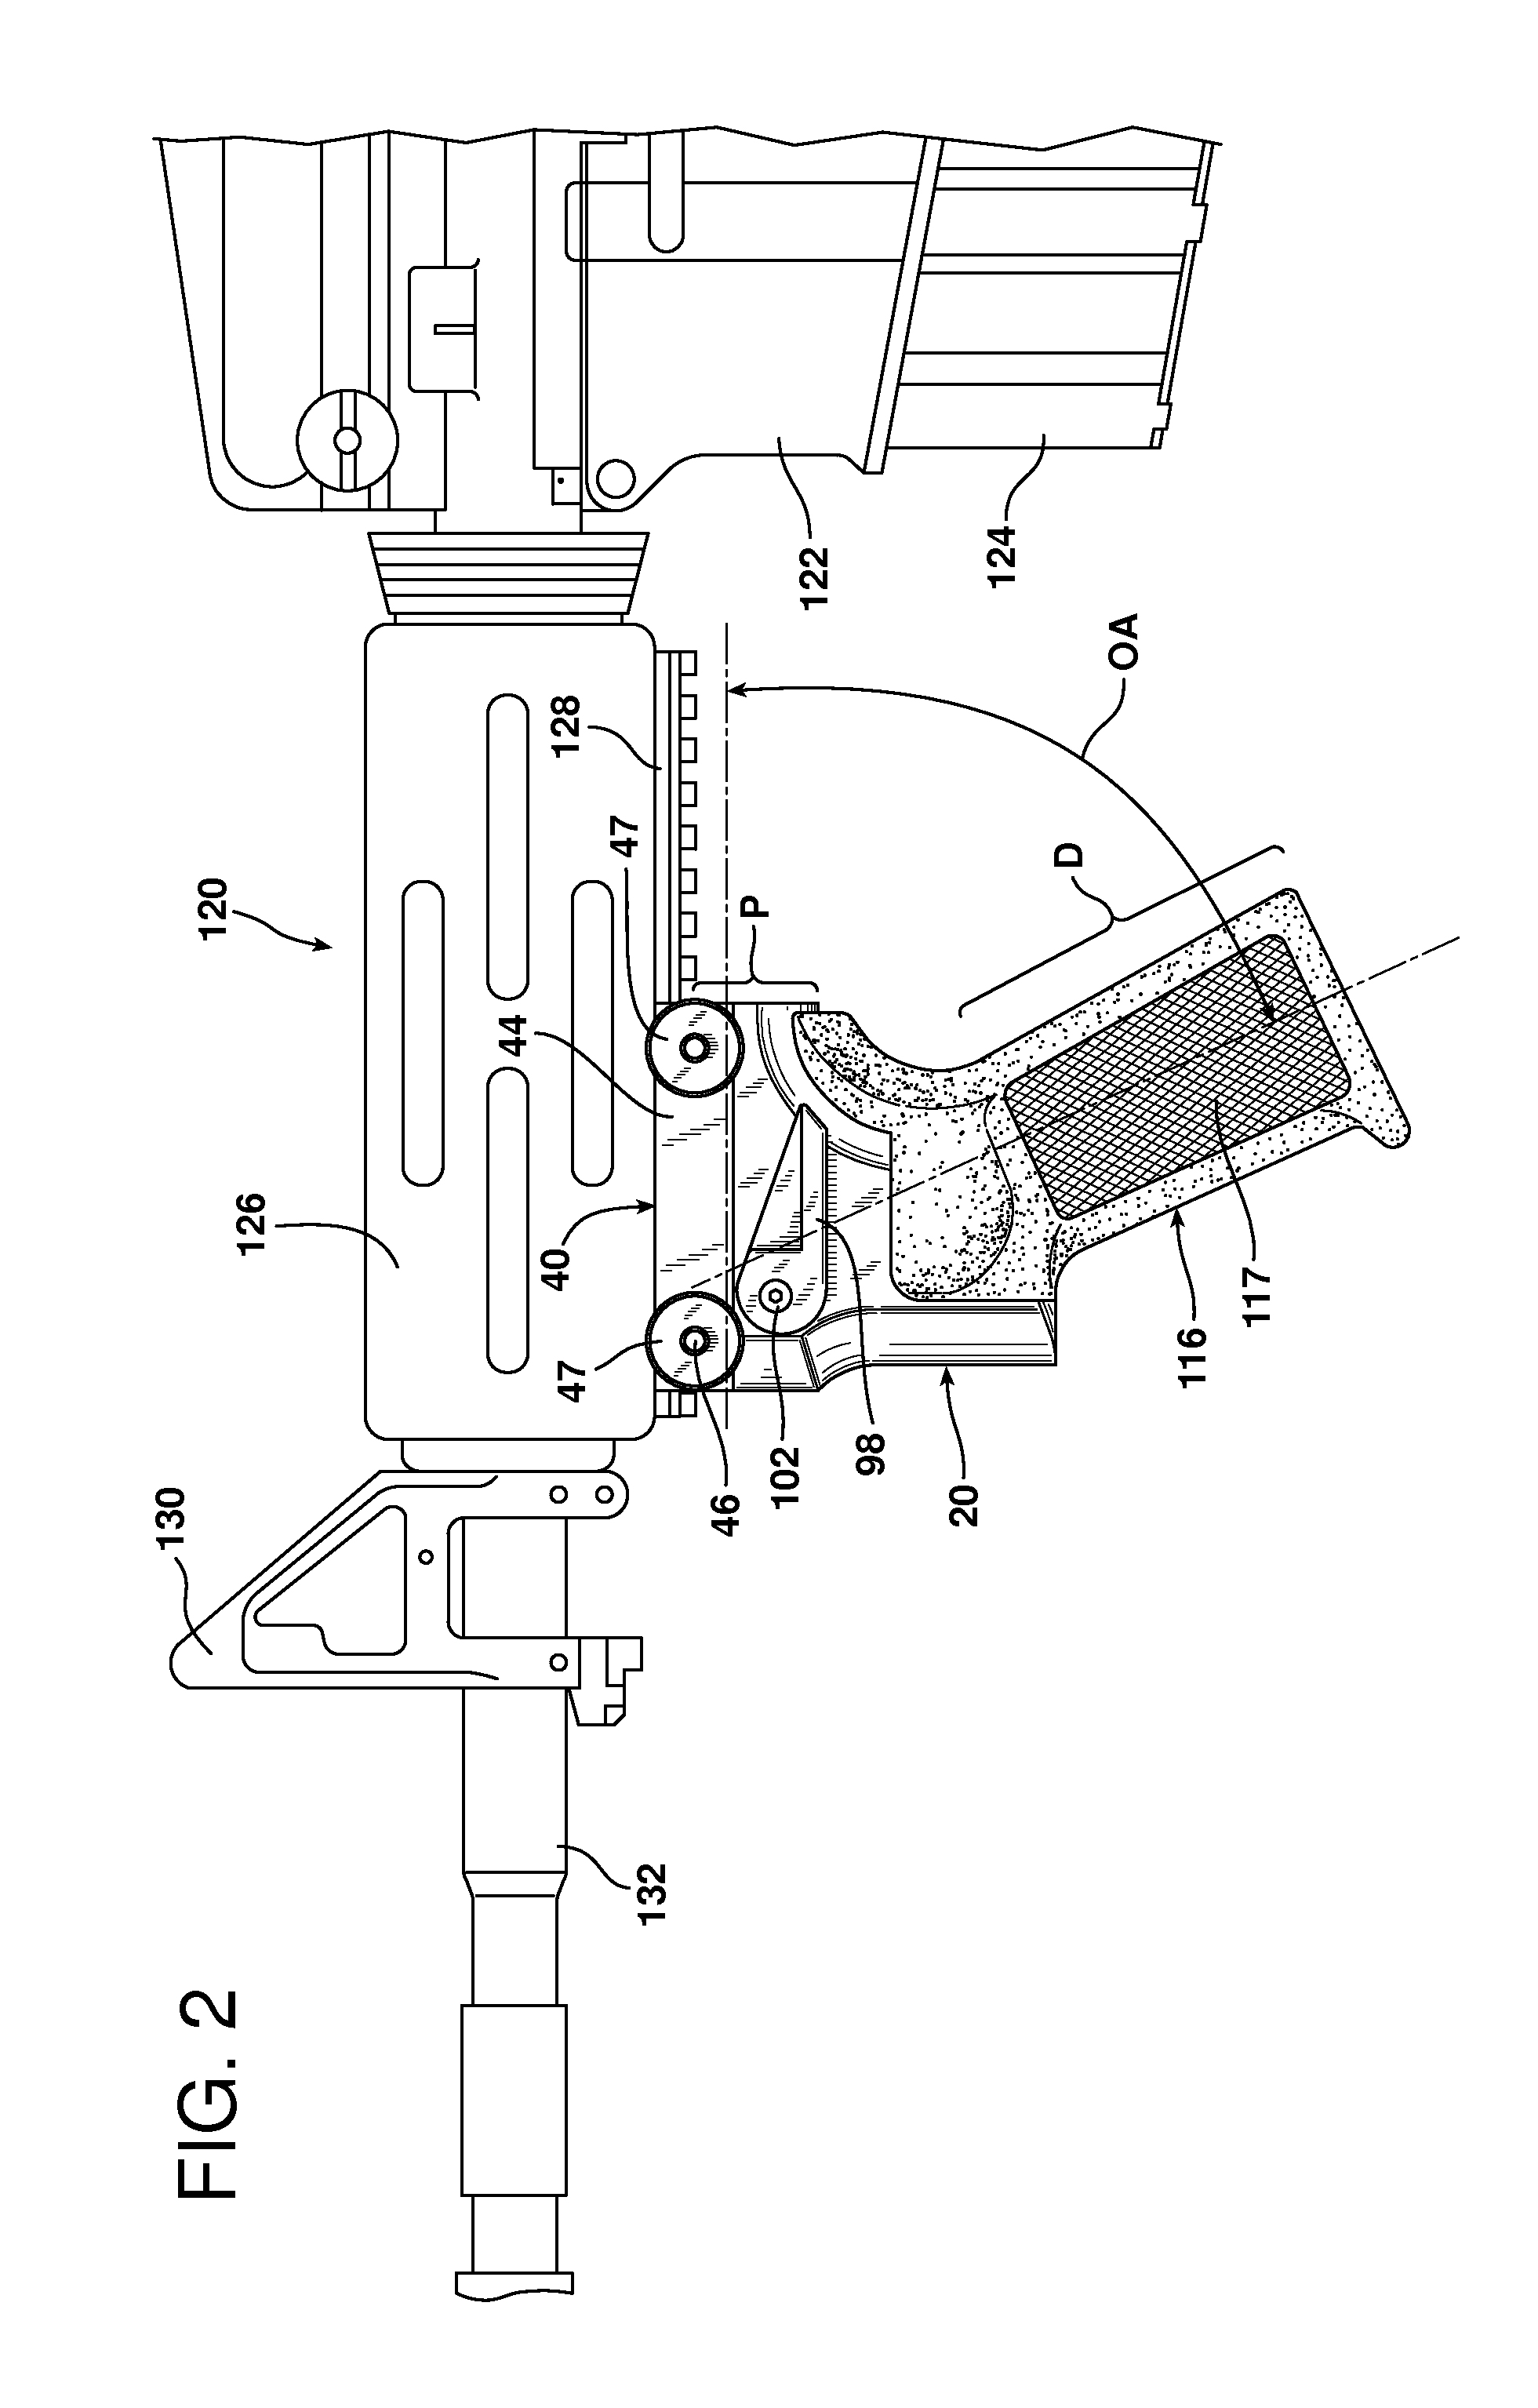 Firearm handgrip adapter